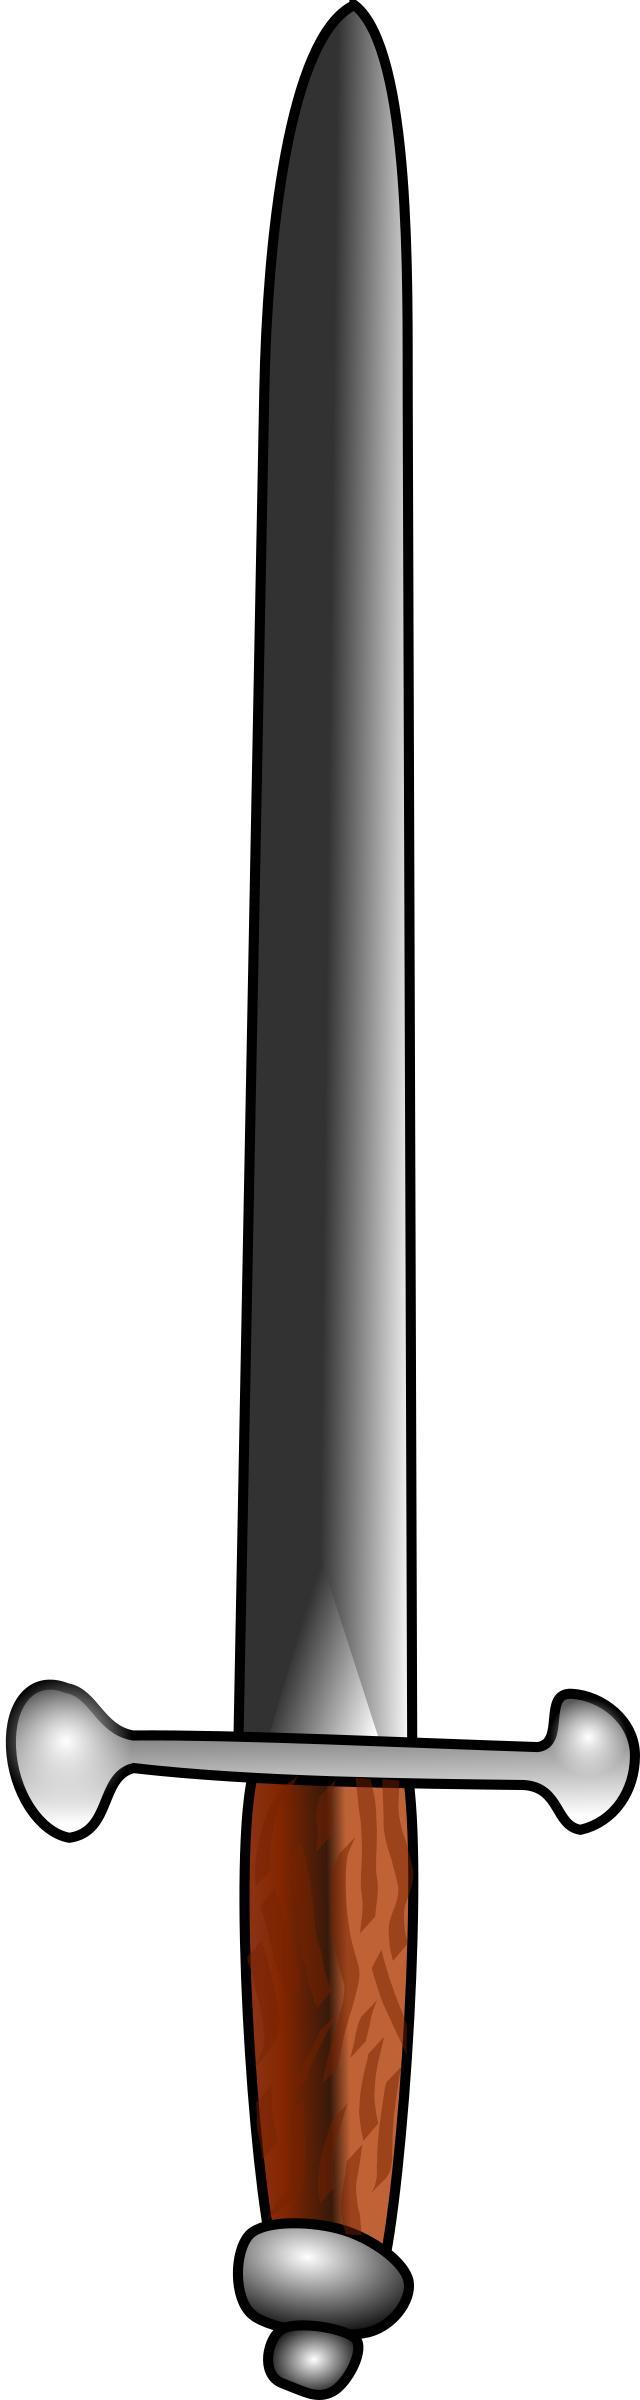 simple sword png transparent